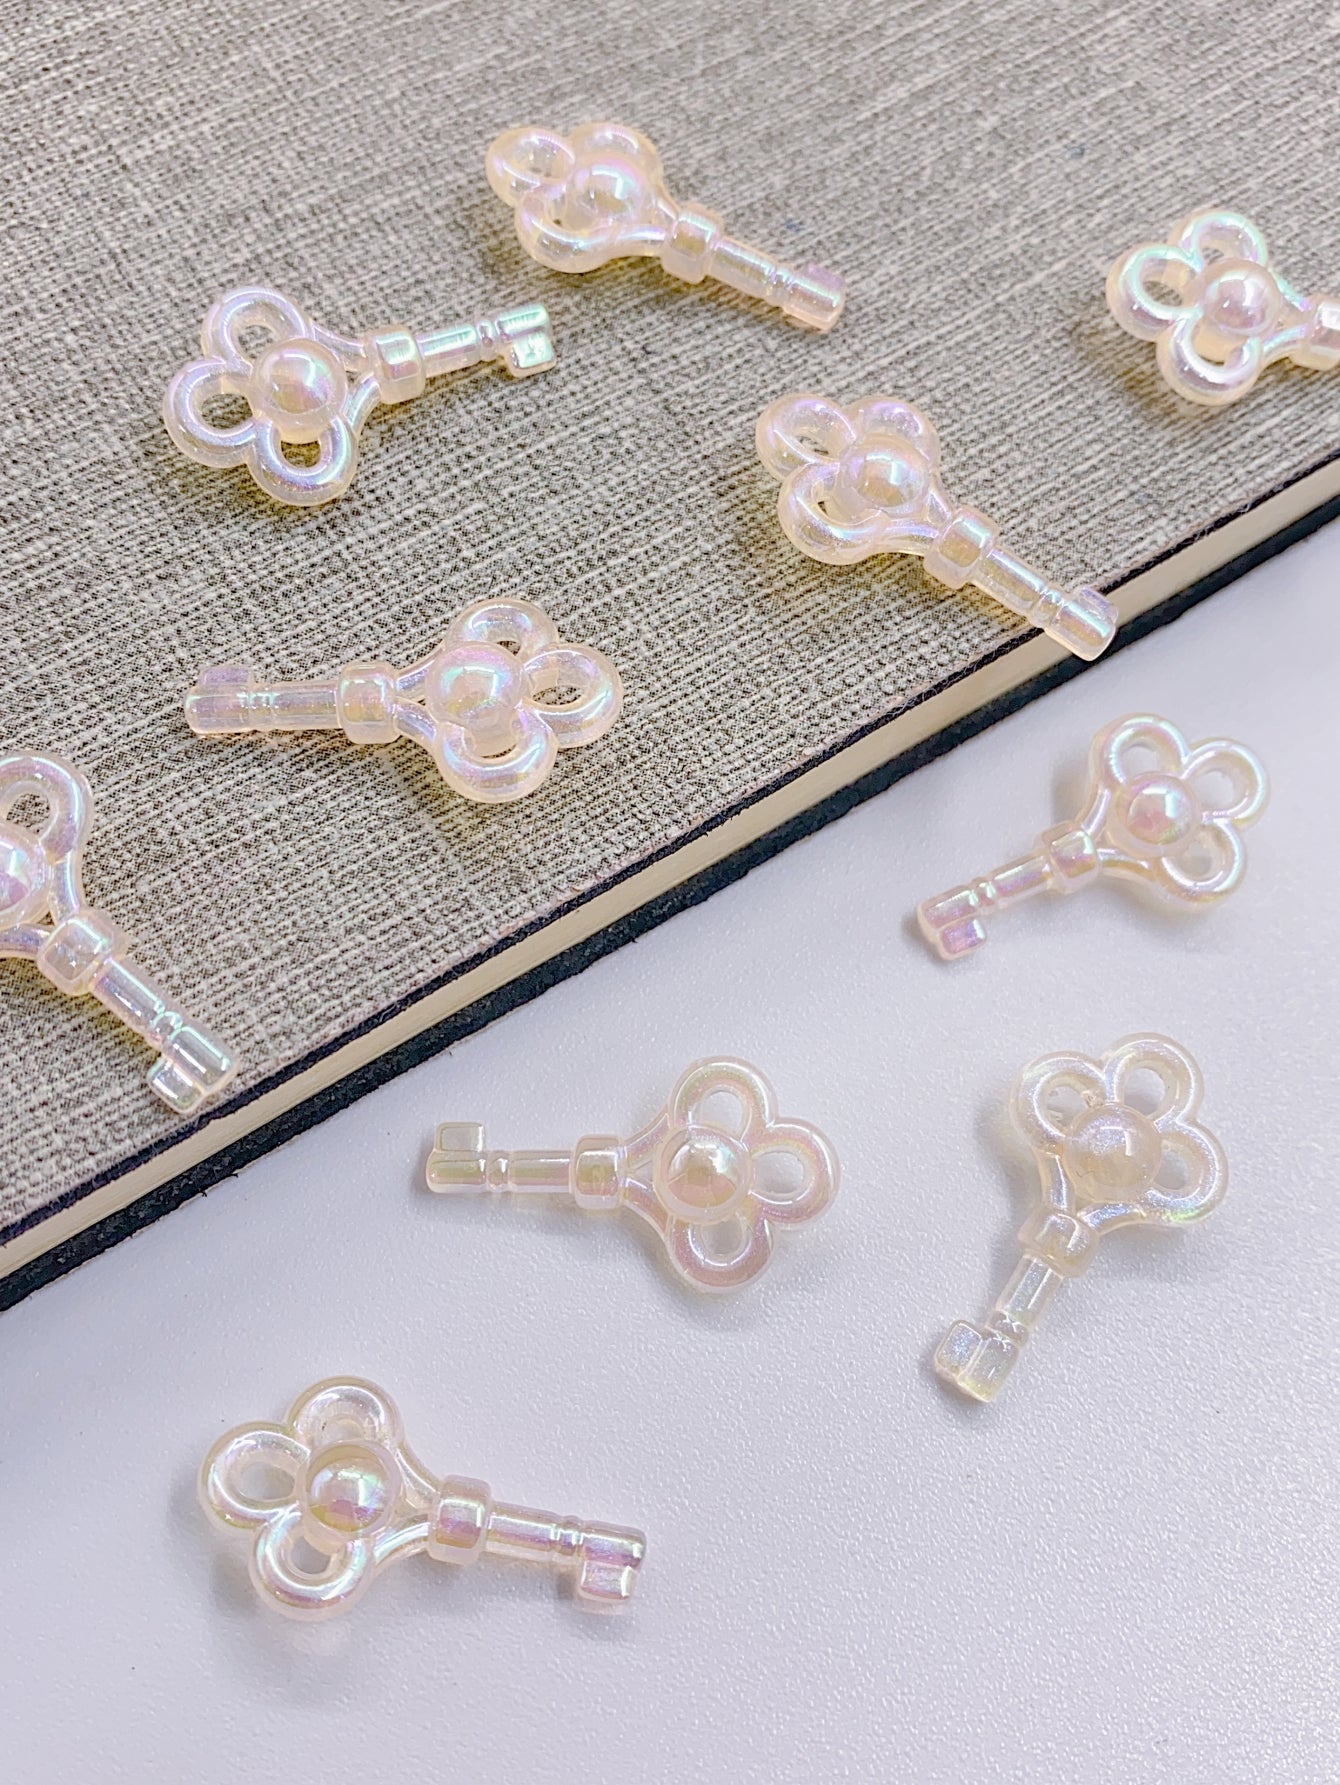 New DIY star color mermaid series auspicious keys colorful jewelry bead material loose beads